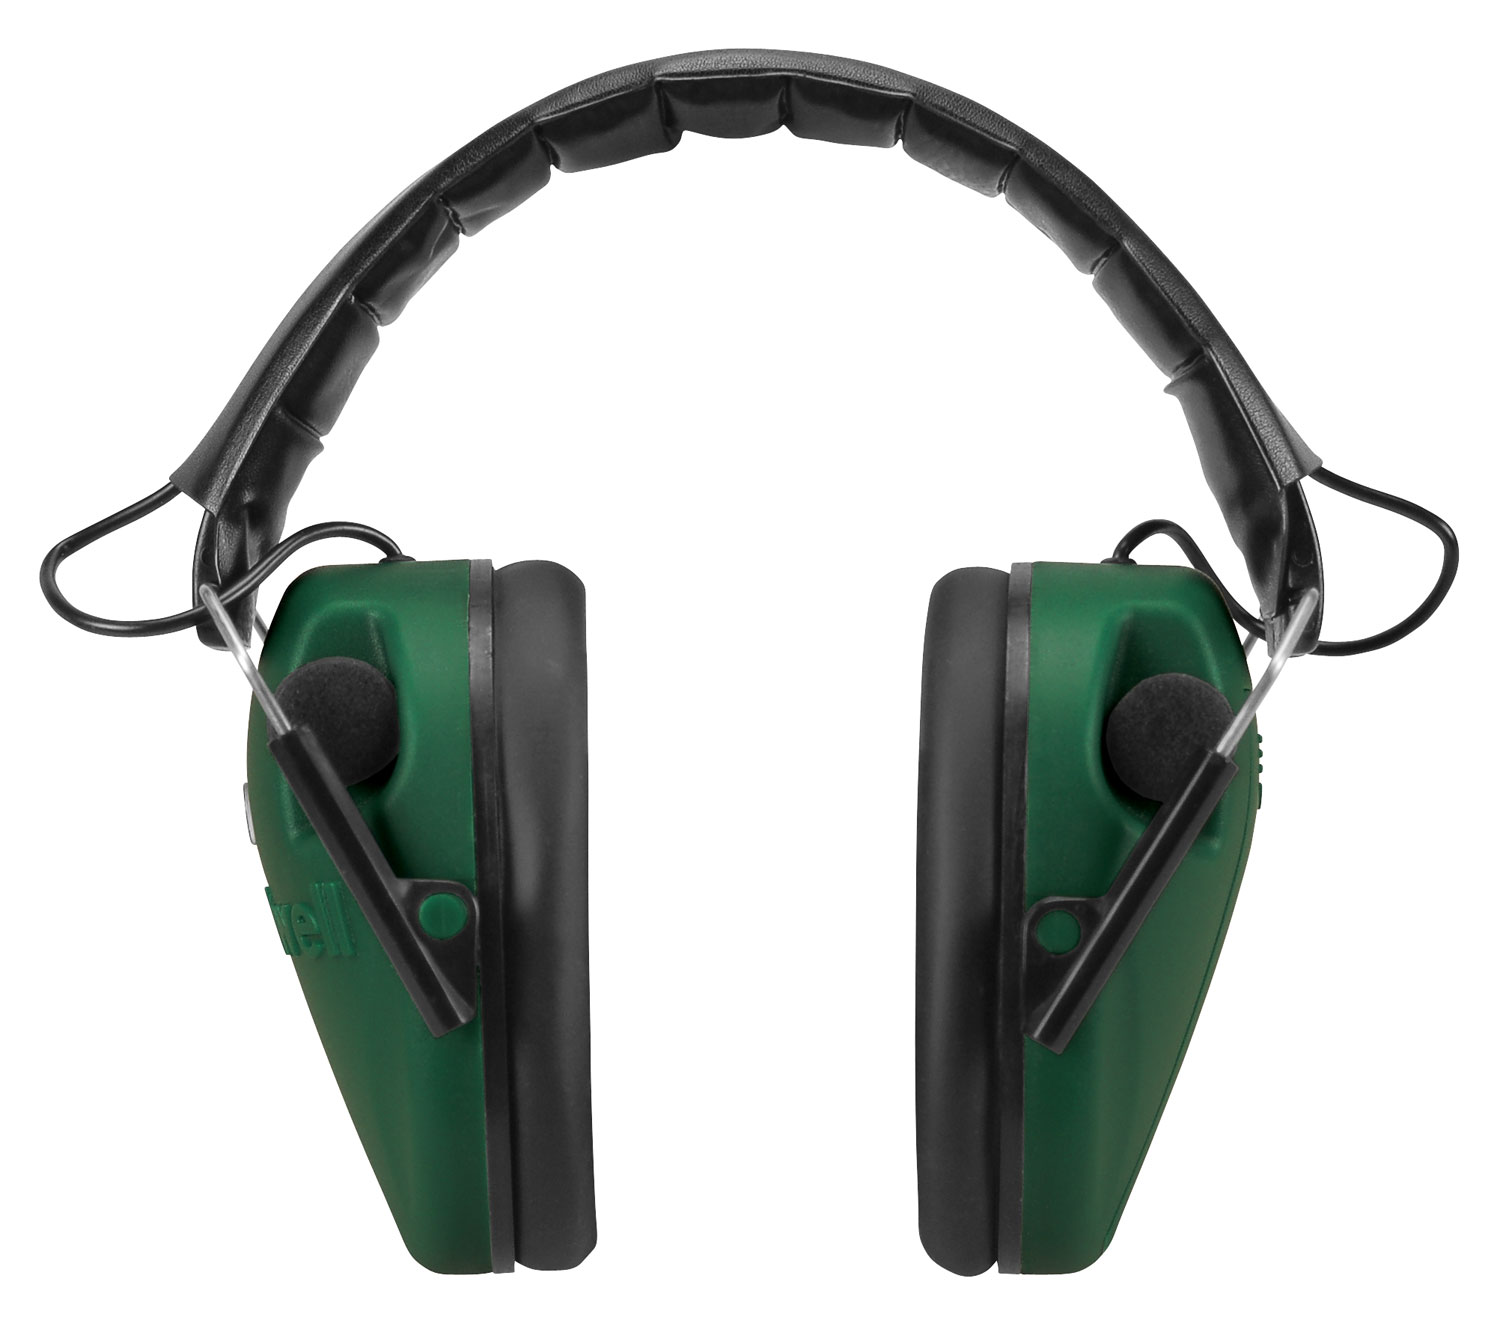 CALDWELL E-MAX EAR MUFF LOW PROFILE ELECTRONIC